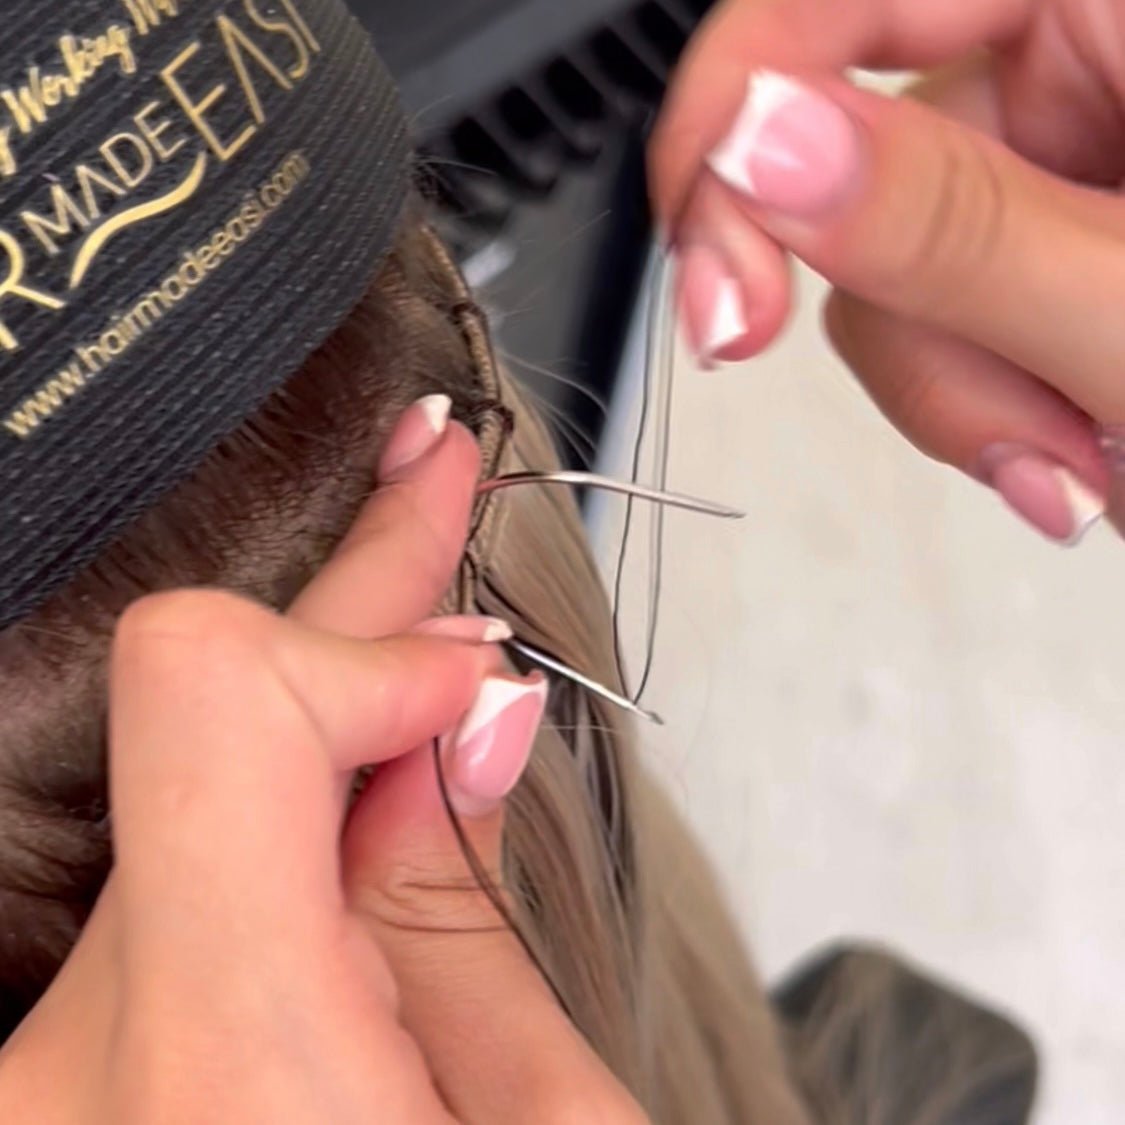 Weaving Thread Hair Extension, Sewing Needles Hair